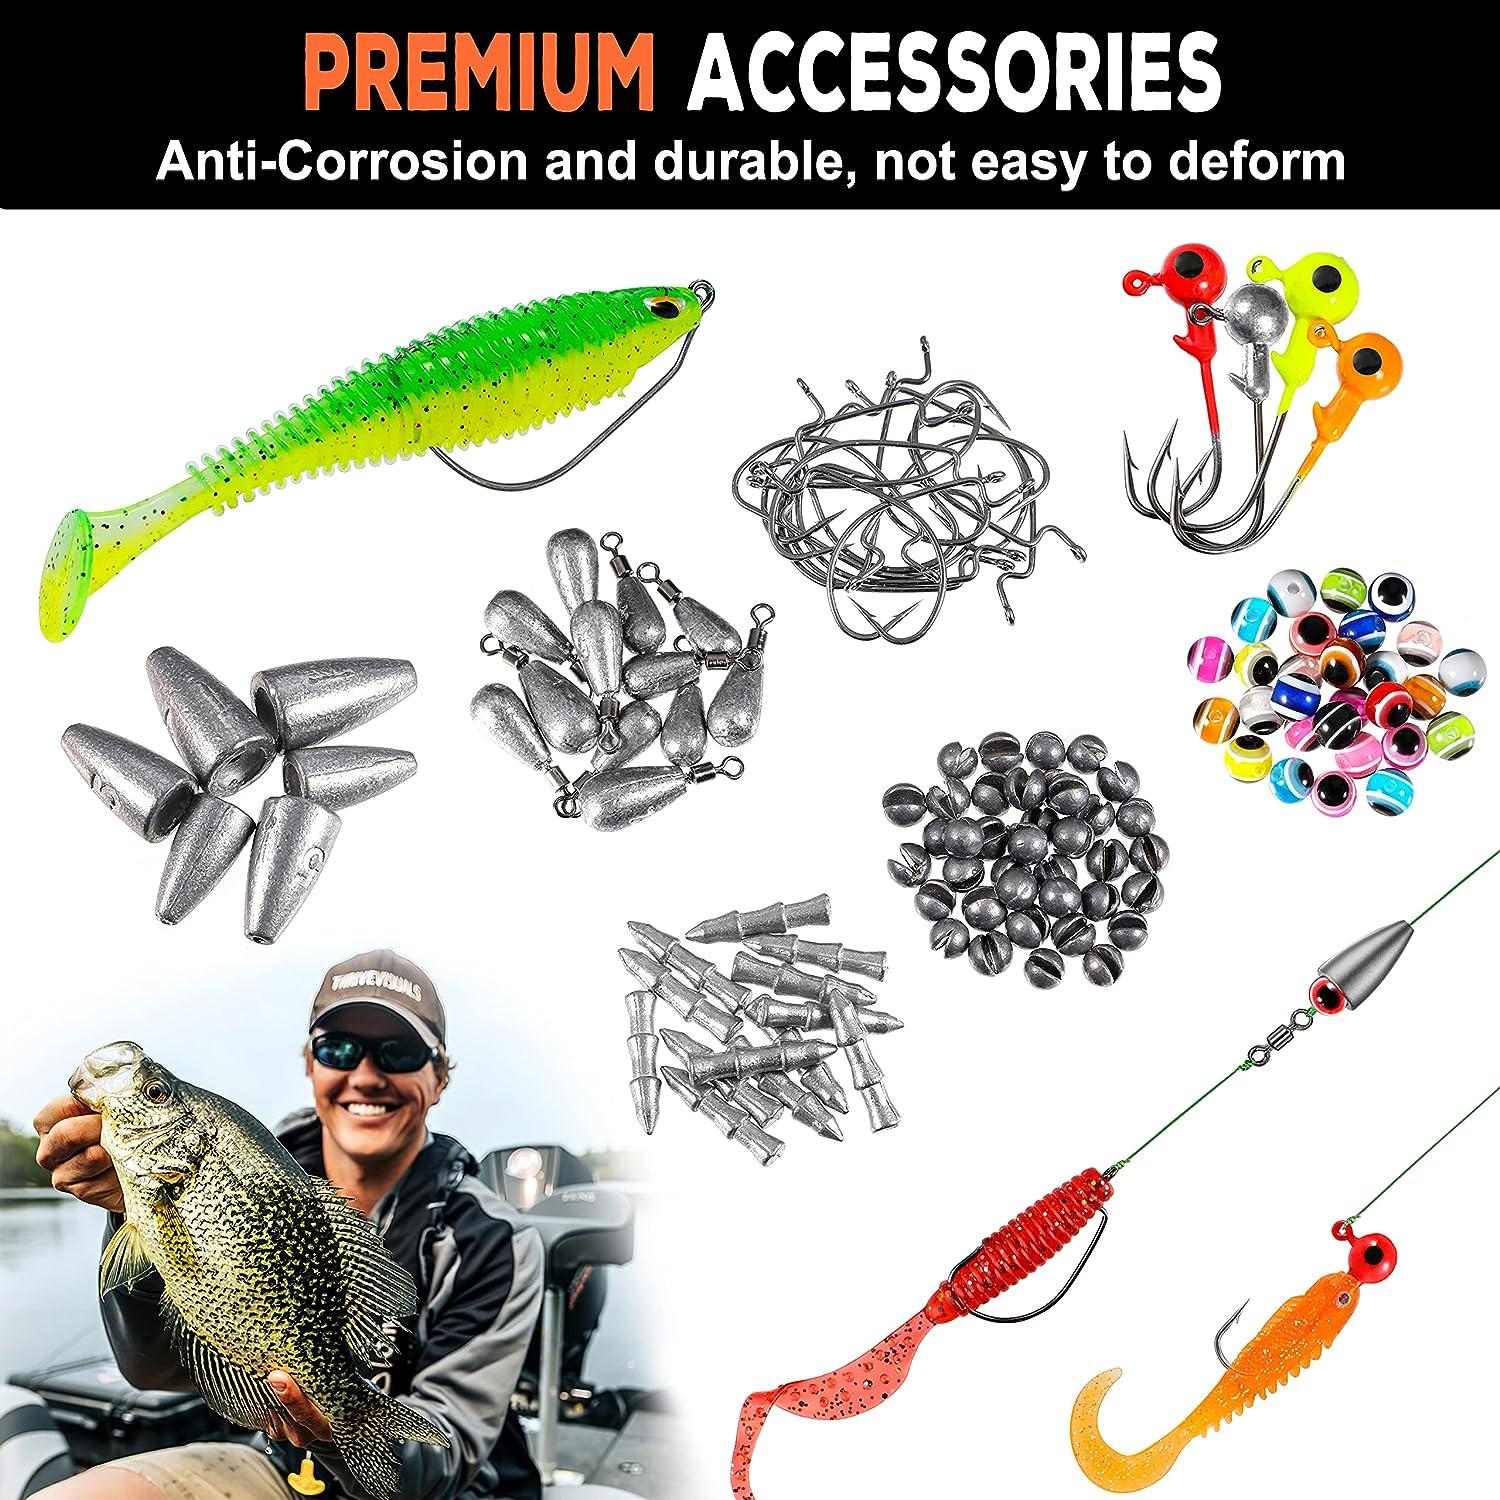 PLUSINNO 201pcs Fishing Accessories Kit, Fishing Tackle Box with